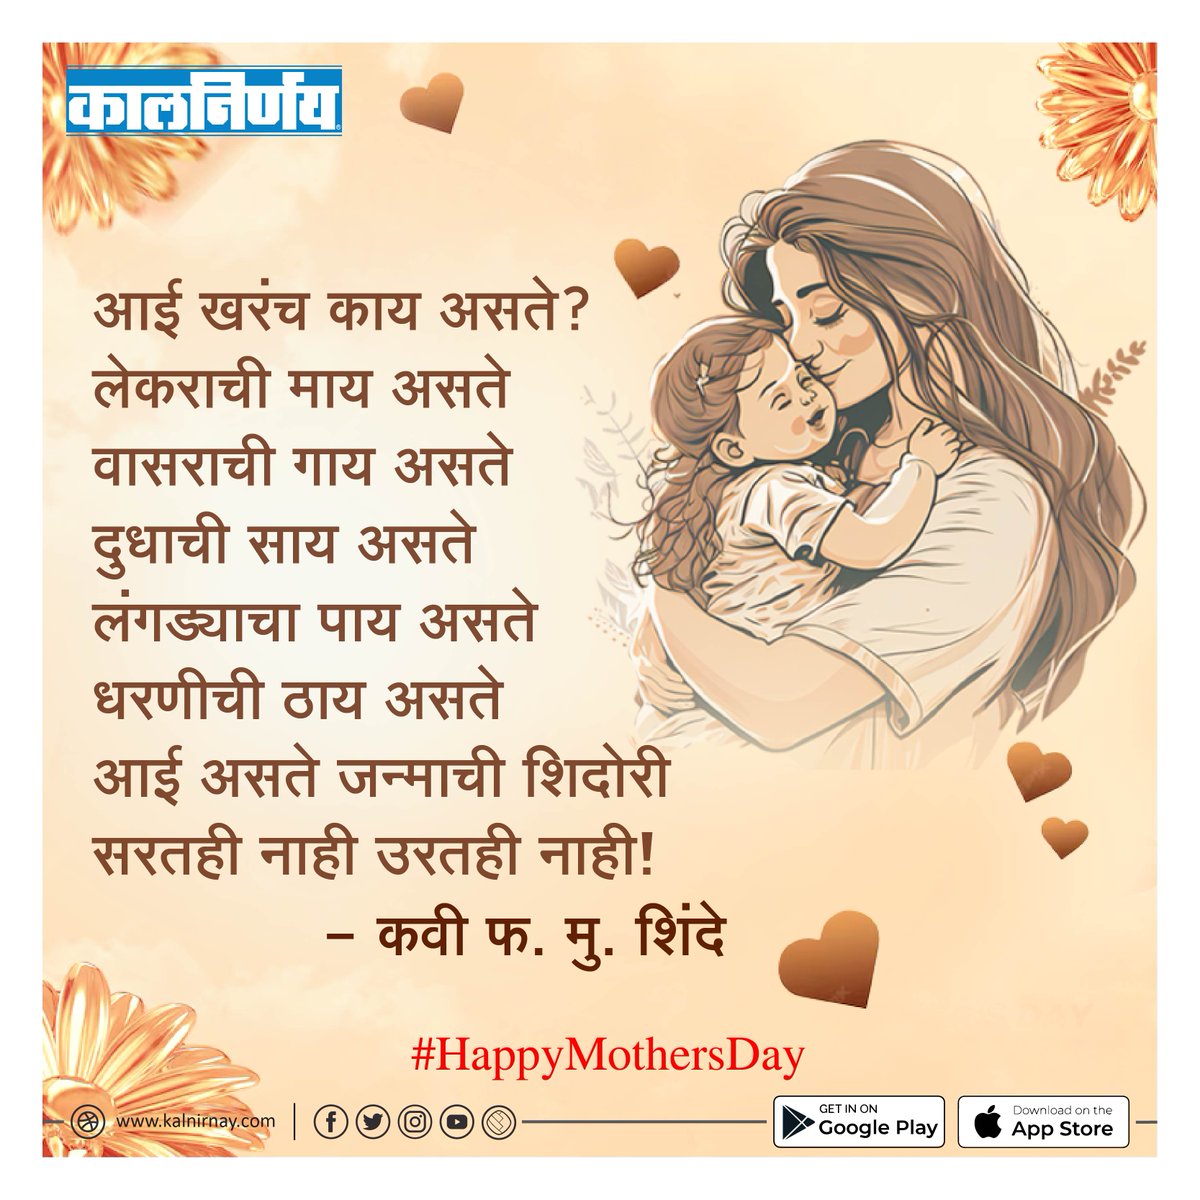 जागतिक मातृदिनाच्या शुभेच्छा!👩‍👧‍👦 . . #Kalnirnay #कालनिर्णय #MothersDay #HappyMothersDay